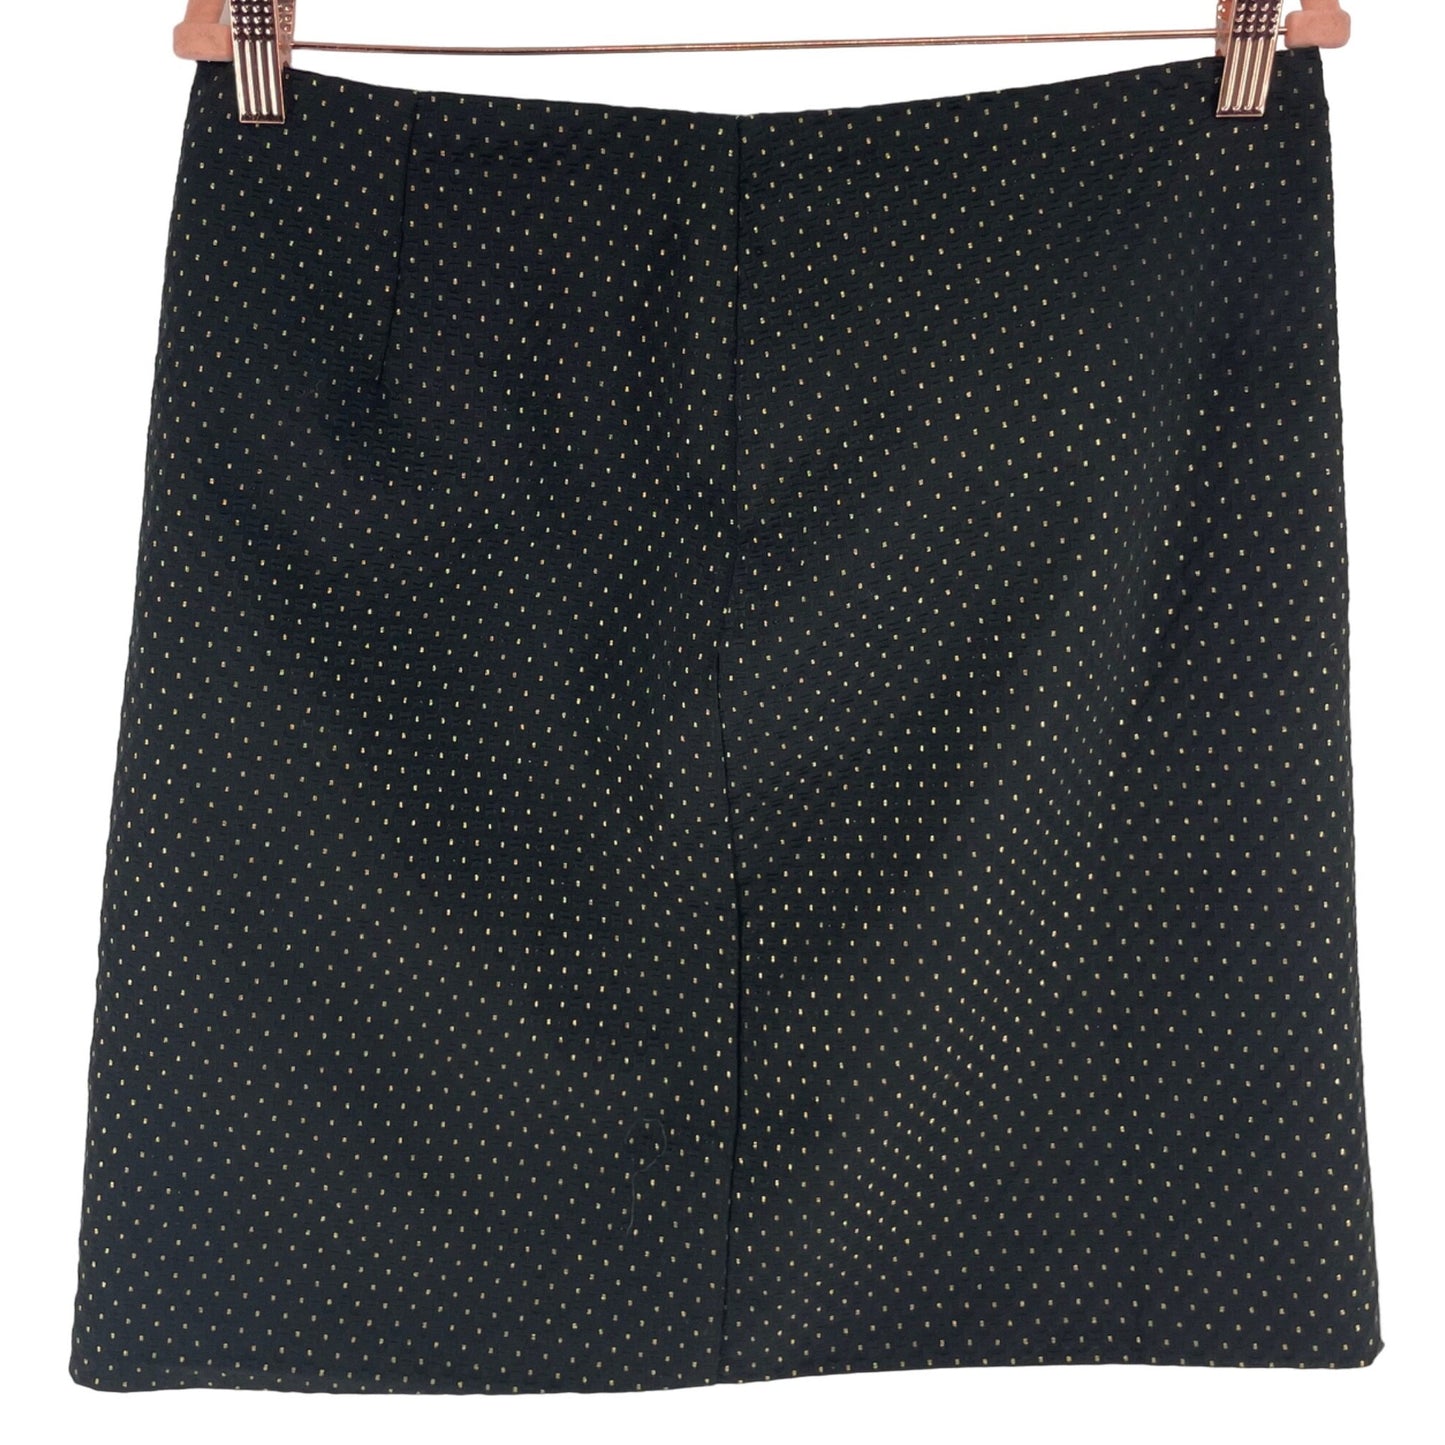 Ann Taylor Factory Women's Size 8 Black & Gold Polka Dot Skirt